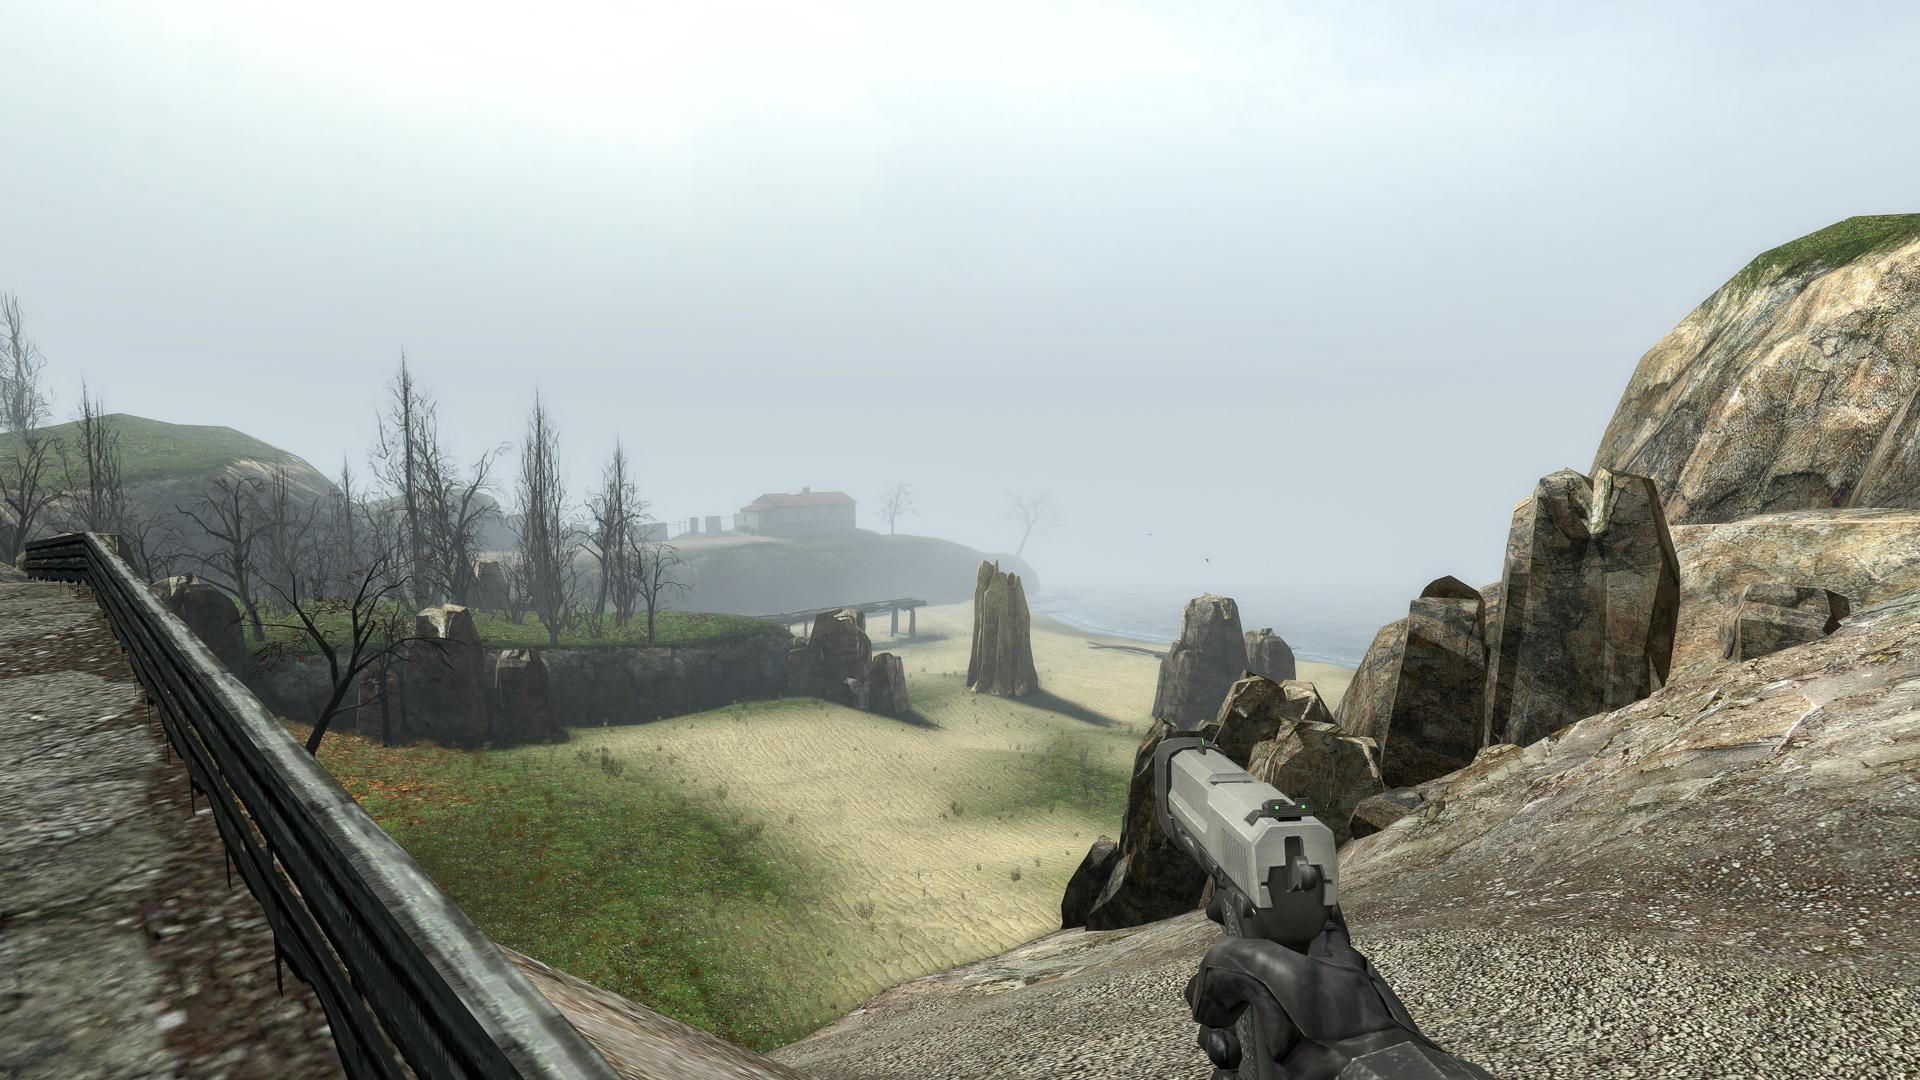 Screenshot №16 from game Half-Life 2: Update